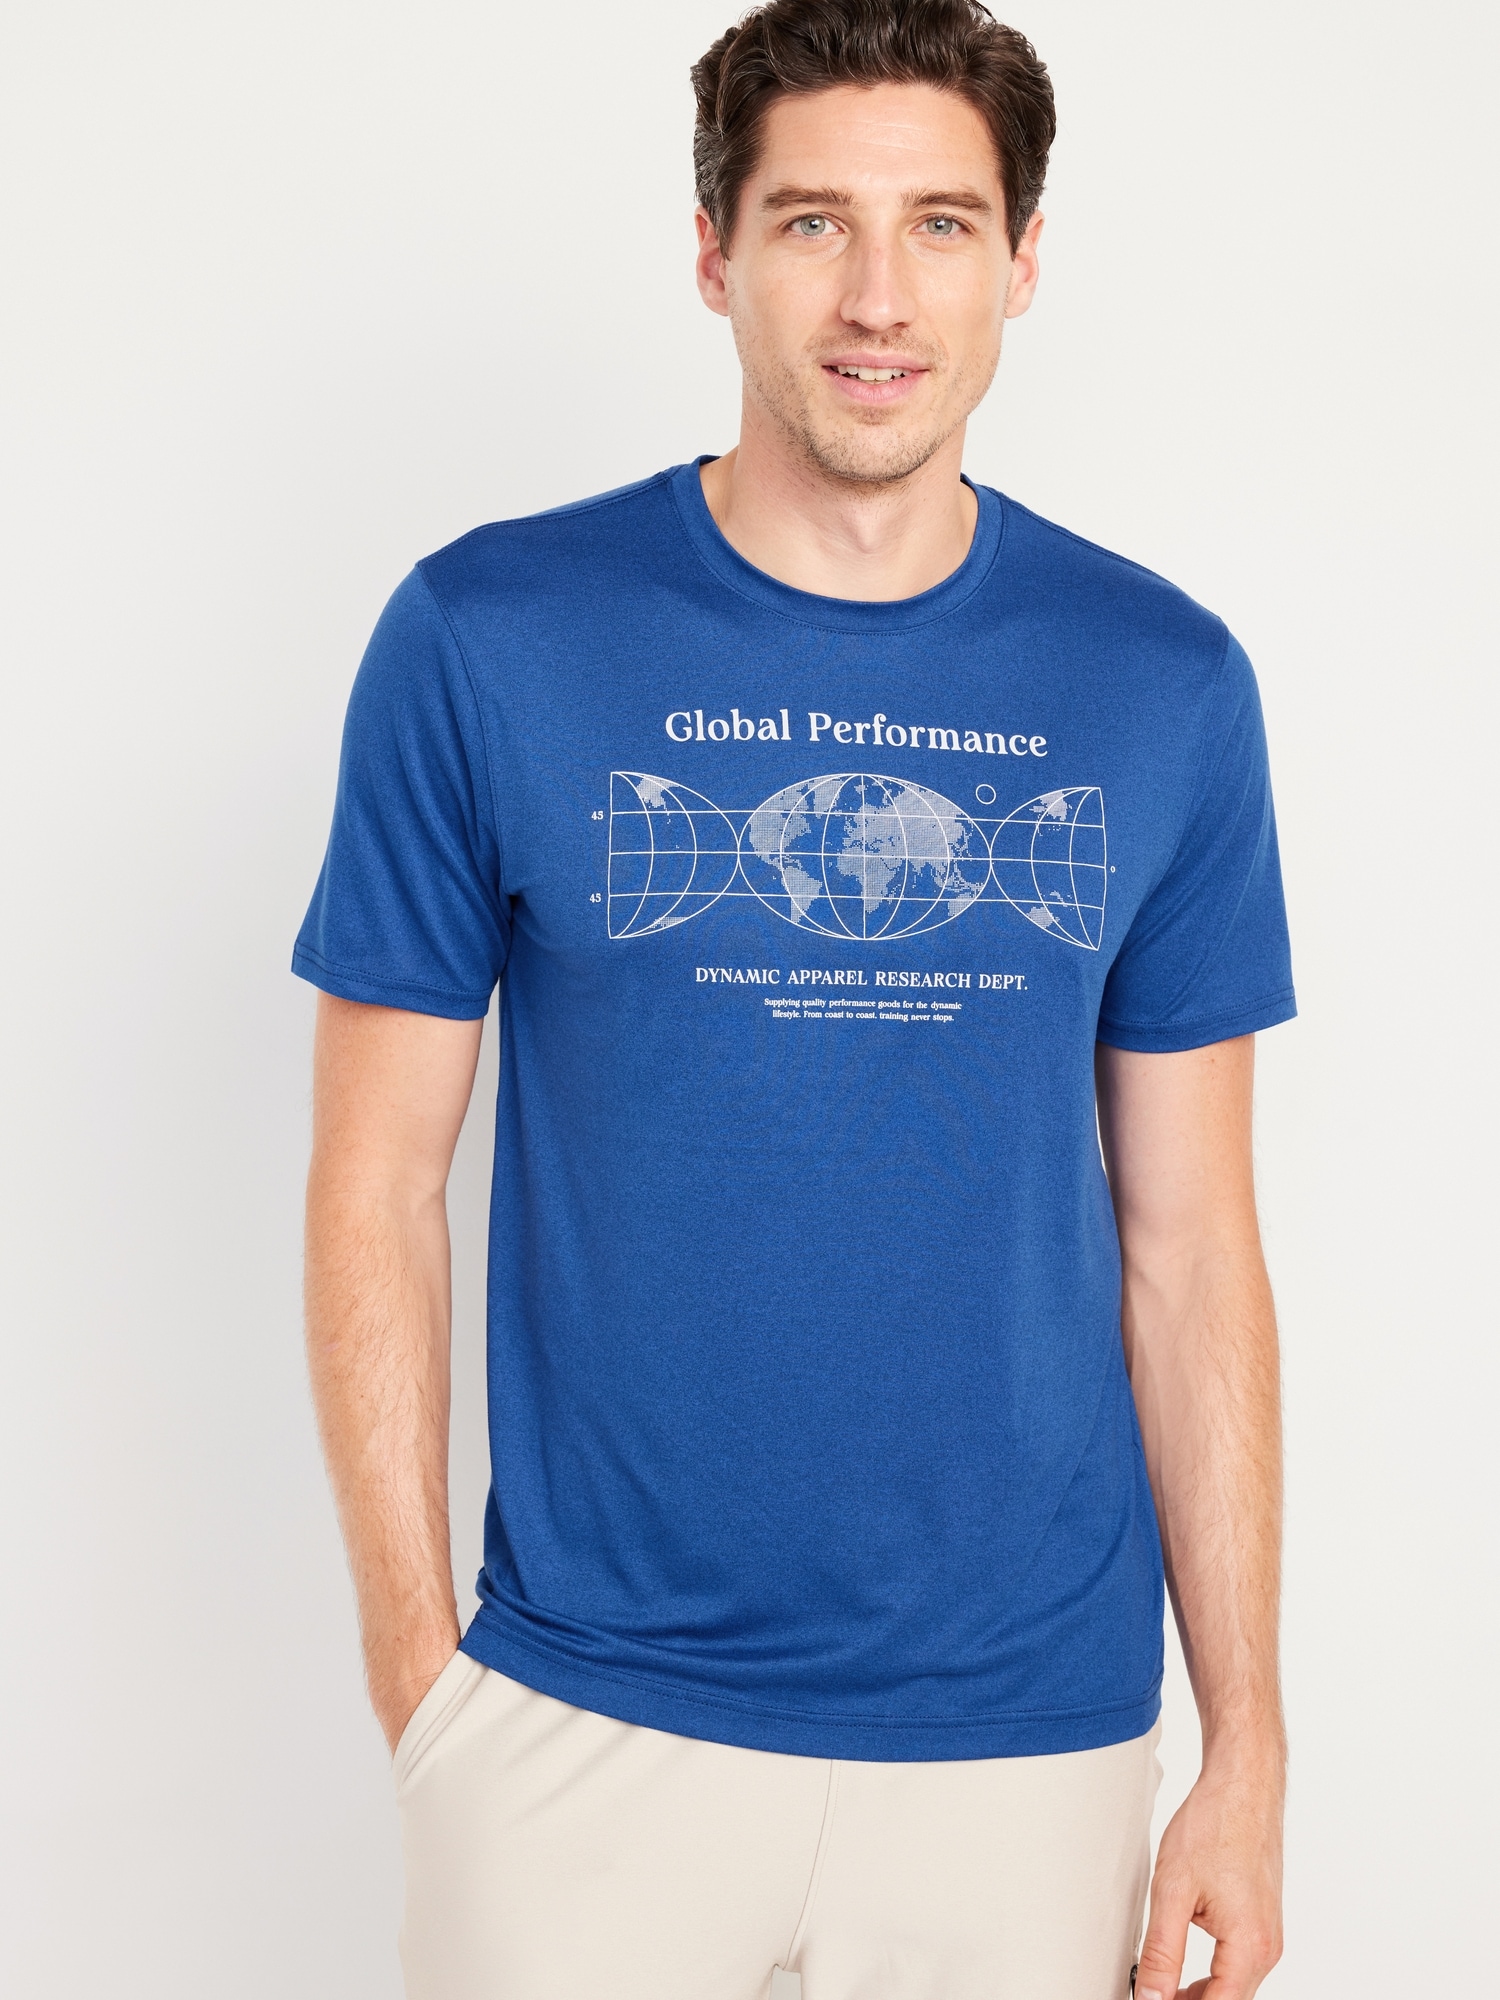 Cloud 94 Soft Graphic T-Shirt